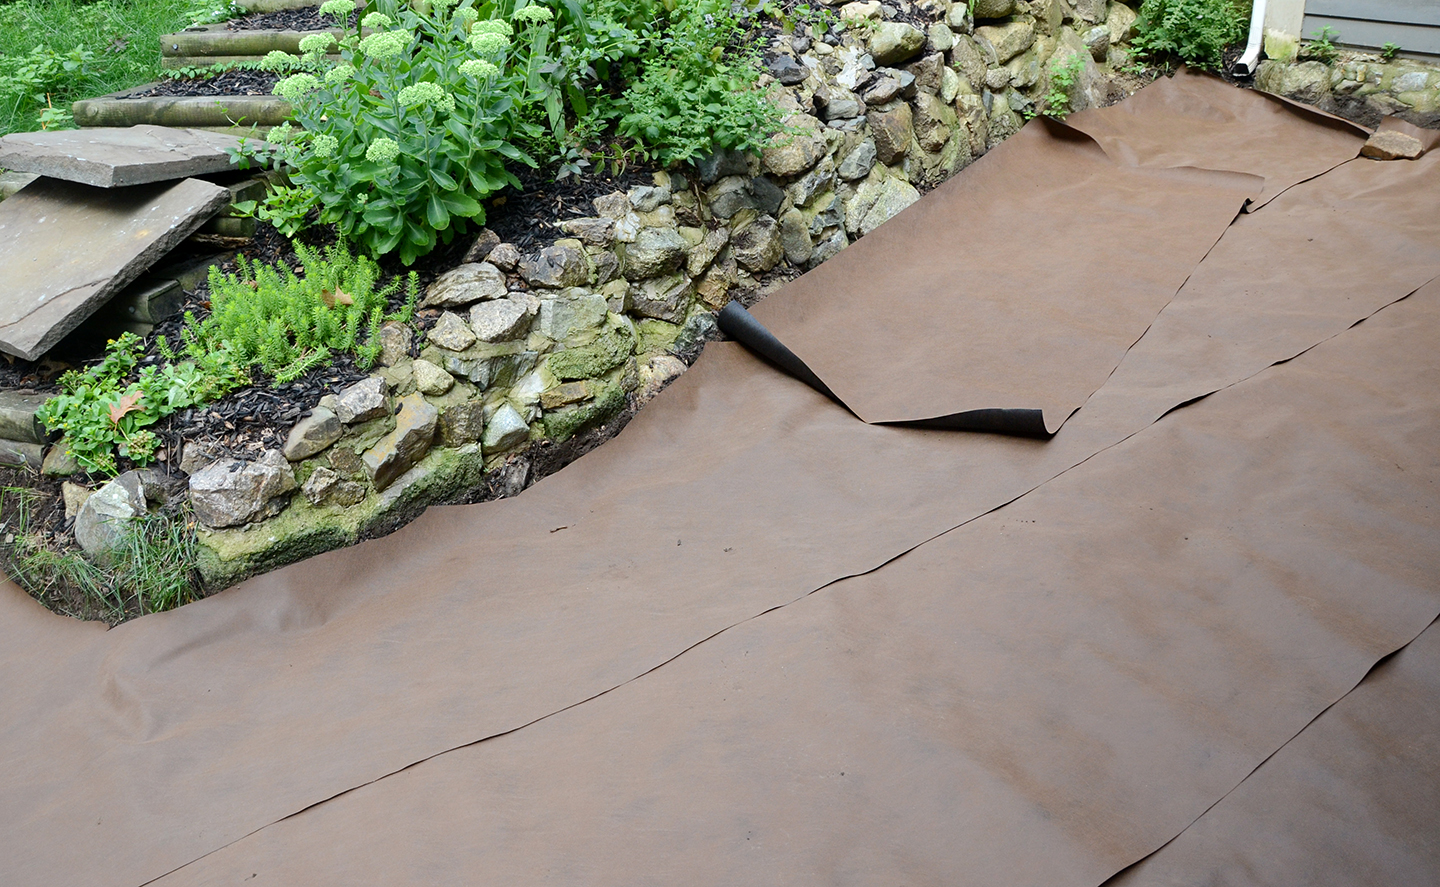 How To Build A Patio: A DIY Stone Paver Patio Tutorial /// By Design Fixation #backyard #diy #patio